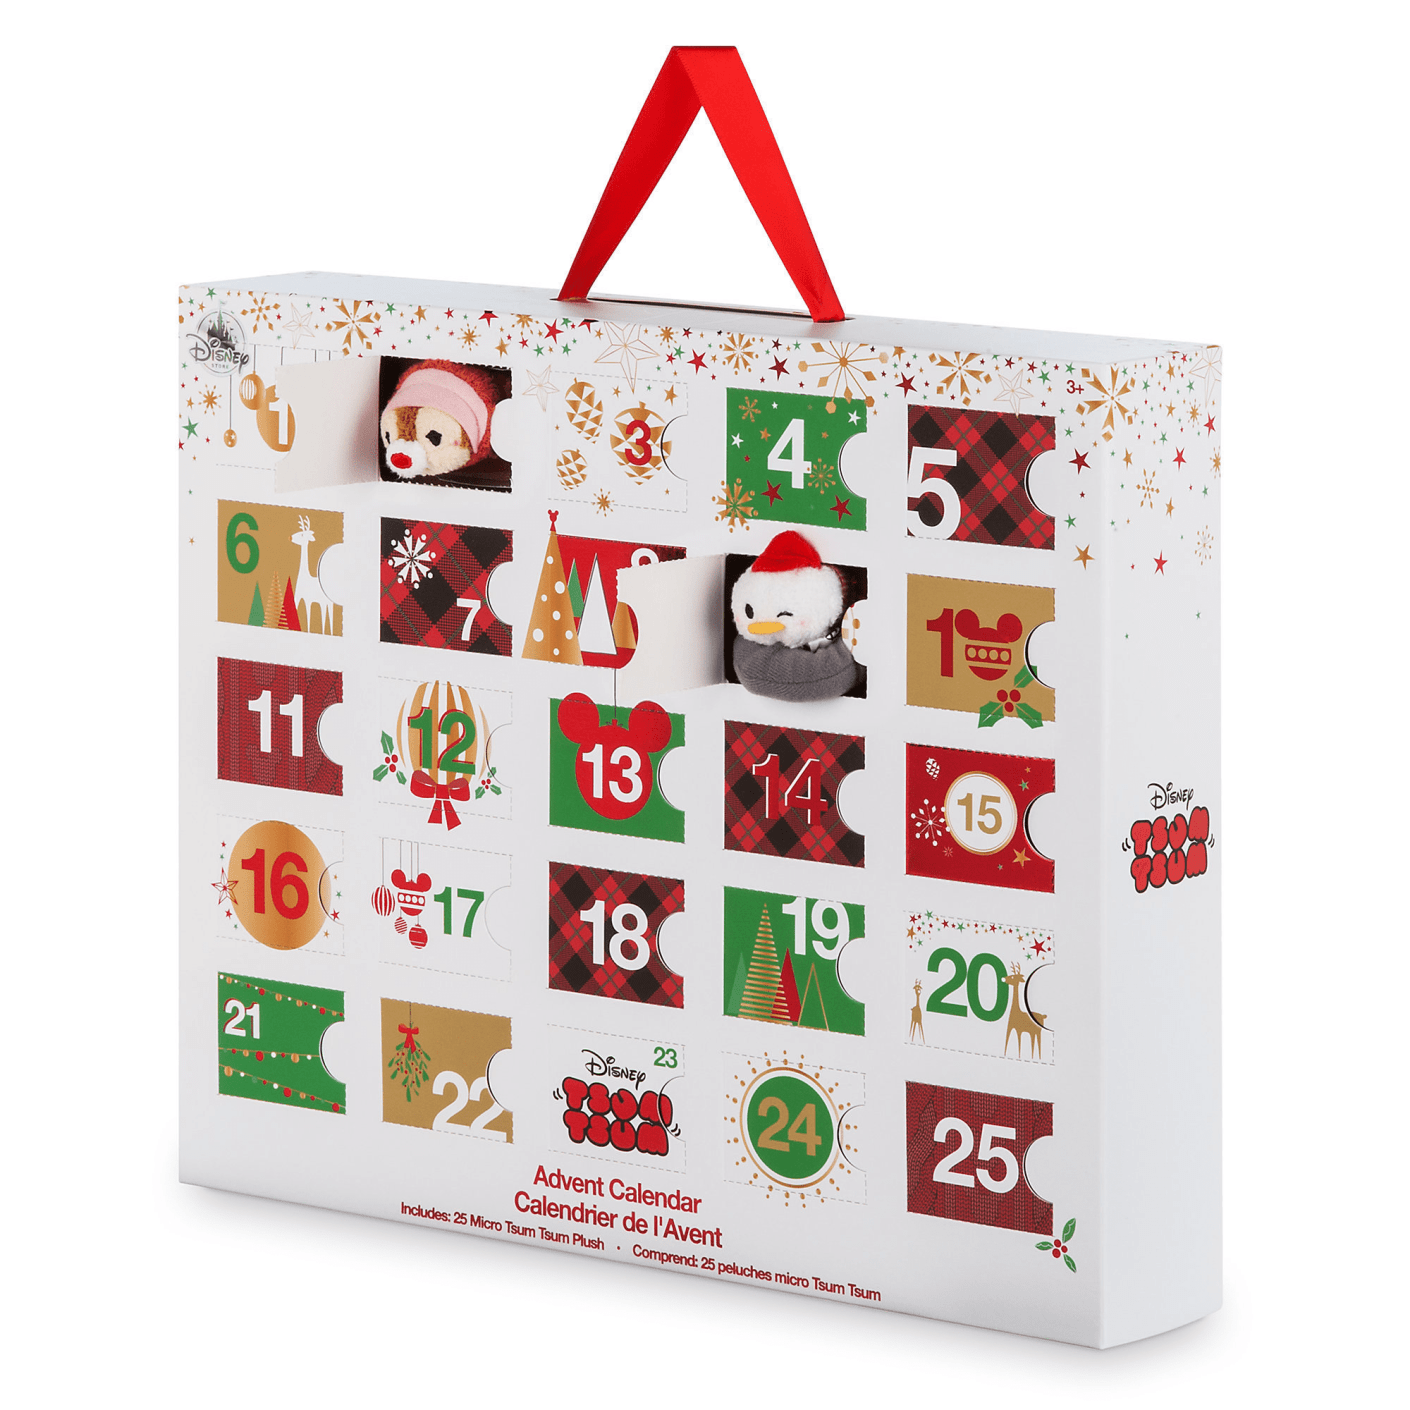 2017 Plush Tsum Tsum Disney Store Exclusive Advent Calendar Available